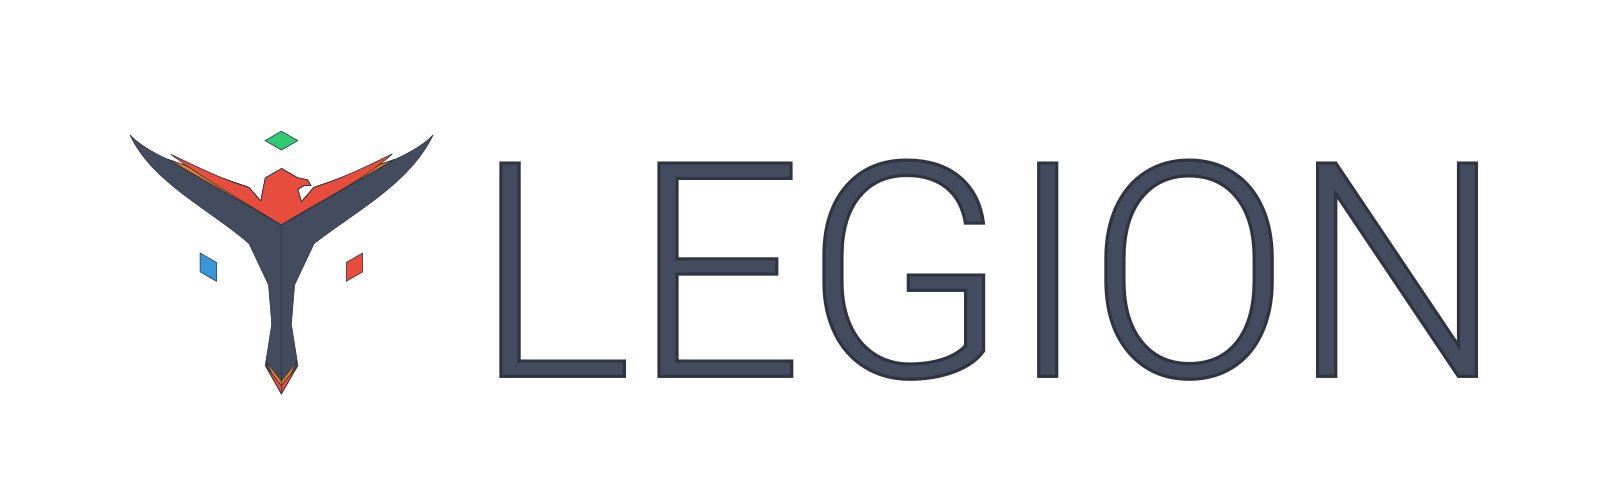 The Legion Engine logo